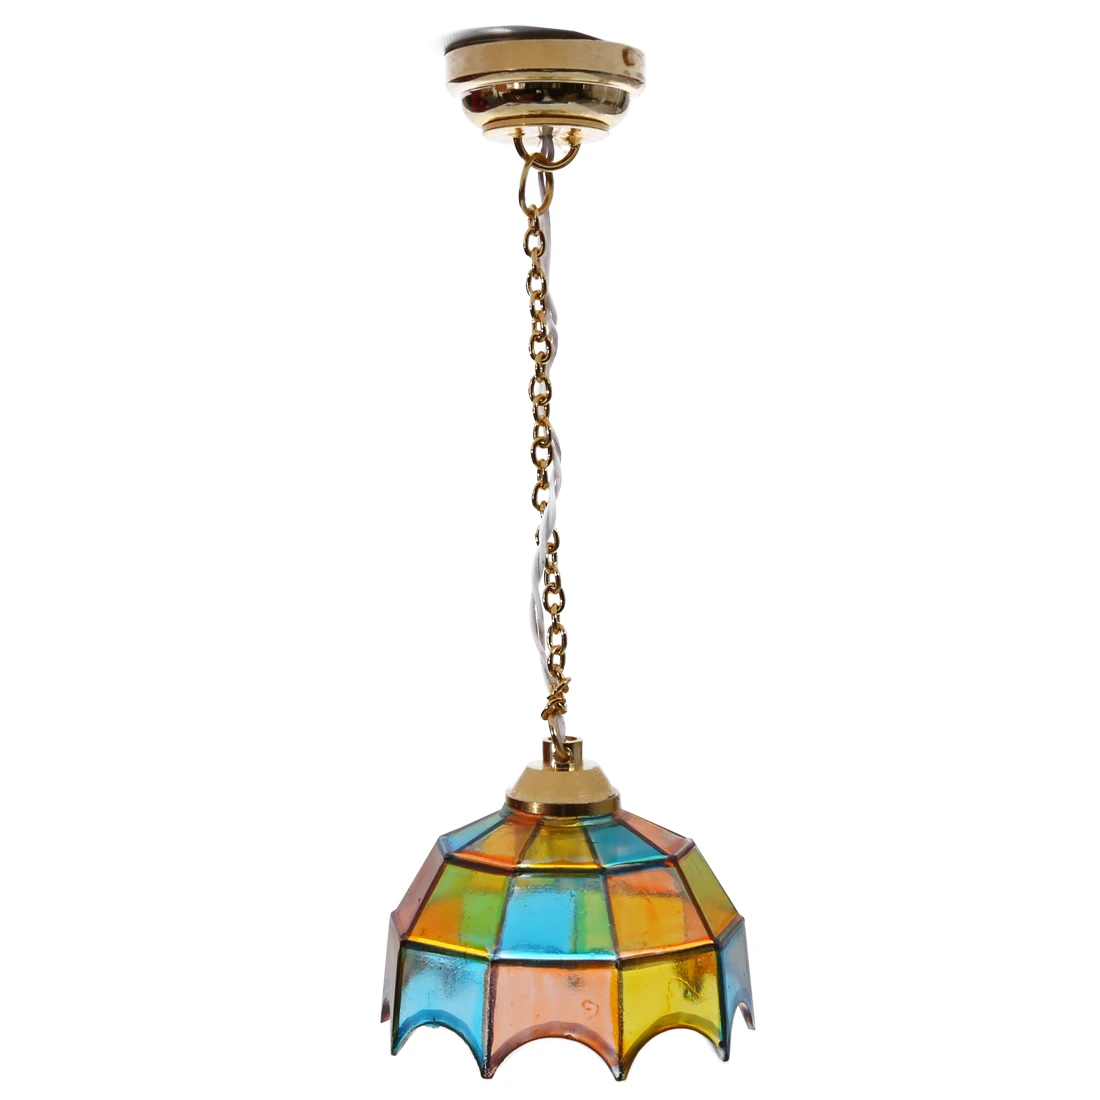 

Metal 1:12 Dollhouse Miniature Ceiling Lamp Model with Multicolor Umbrella Shape Lampshade